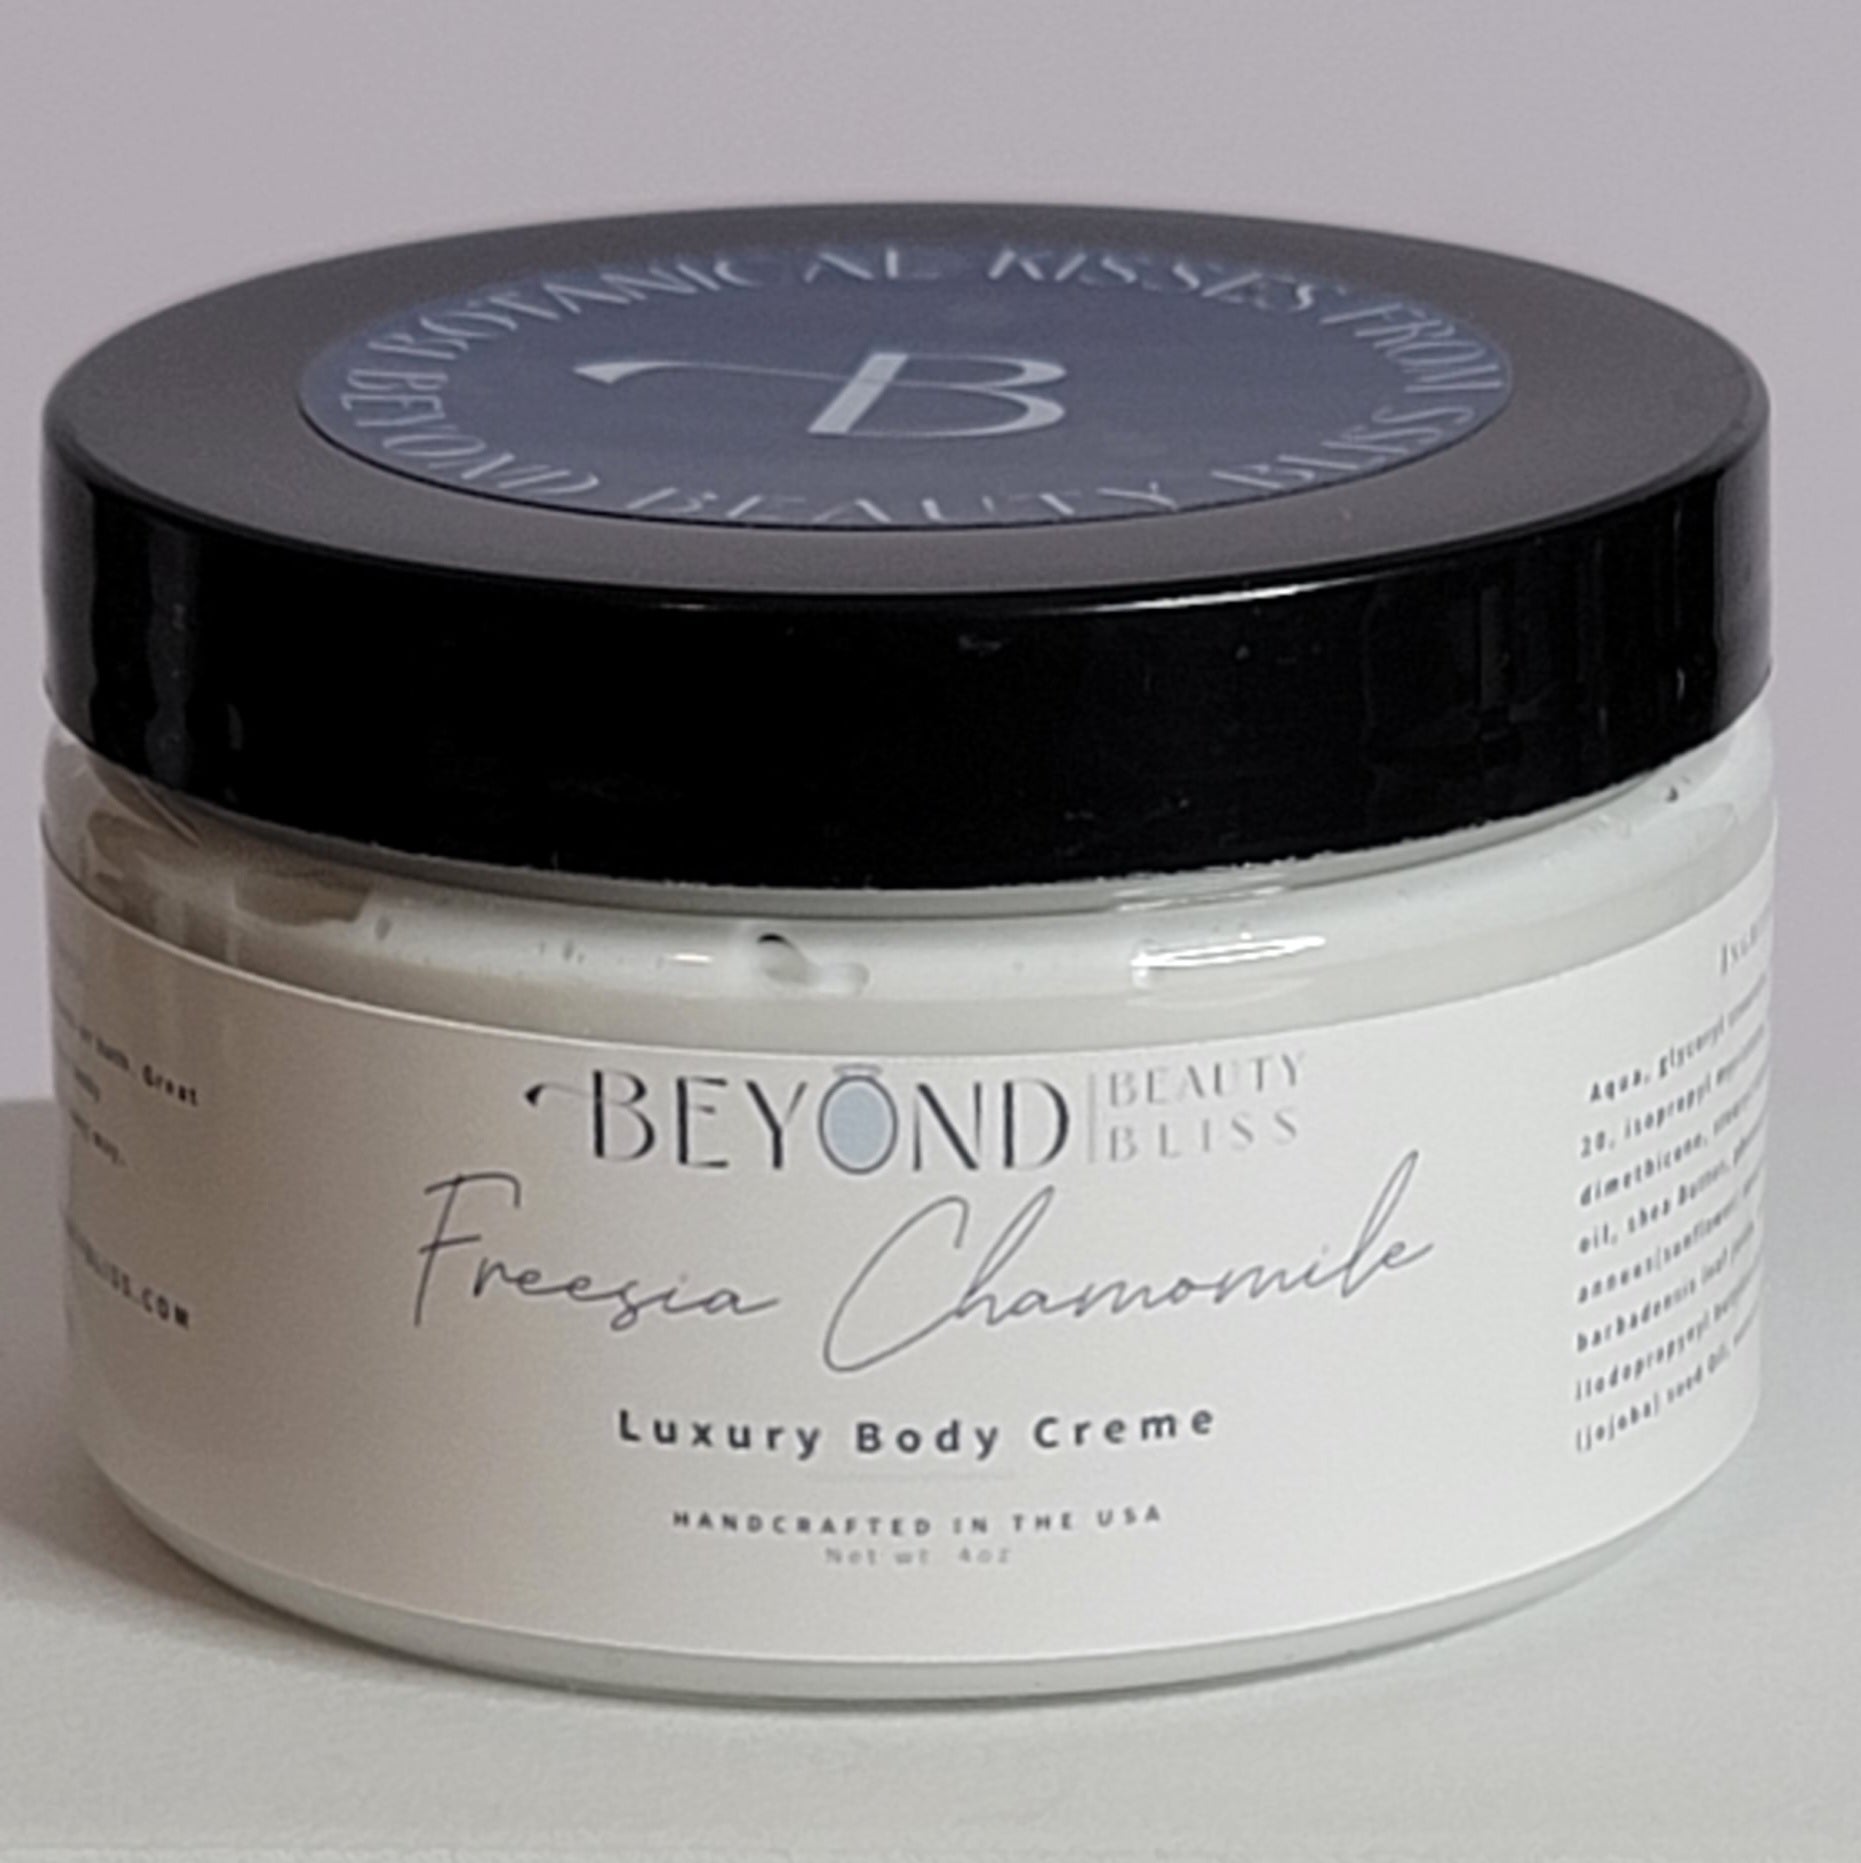 Freesia Chamomile Body Cream| Beyond Beauty Bliss LLC